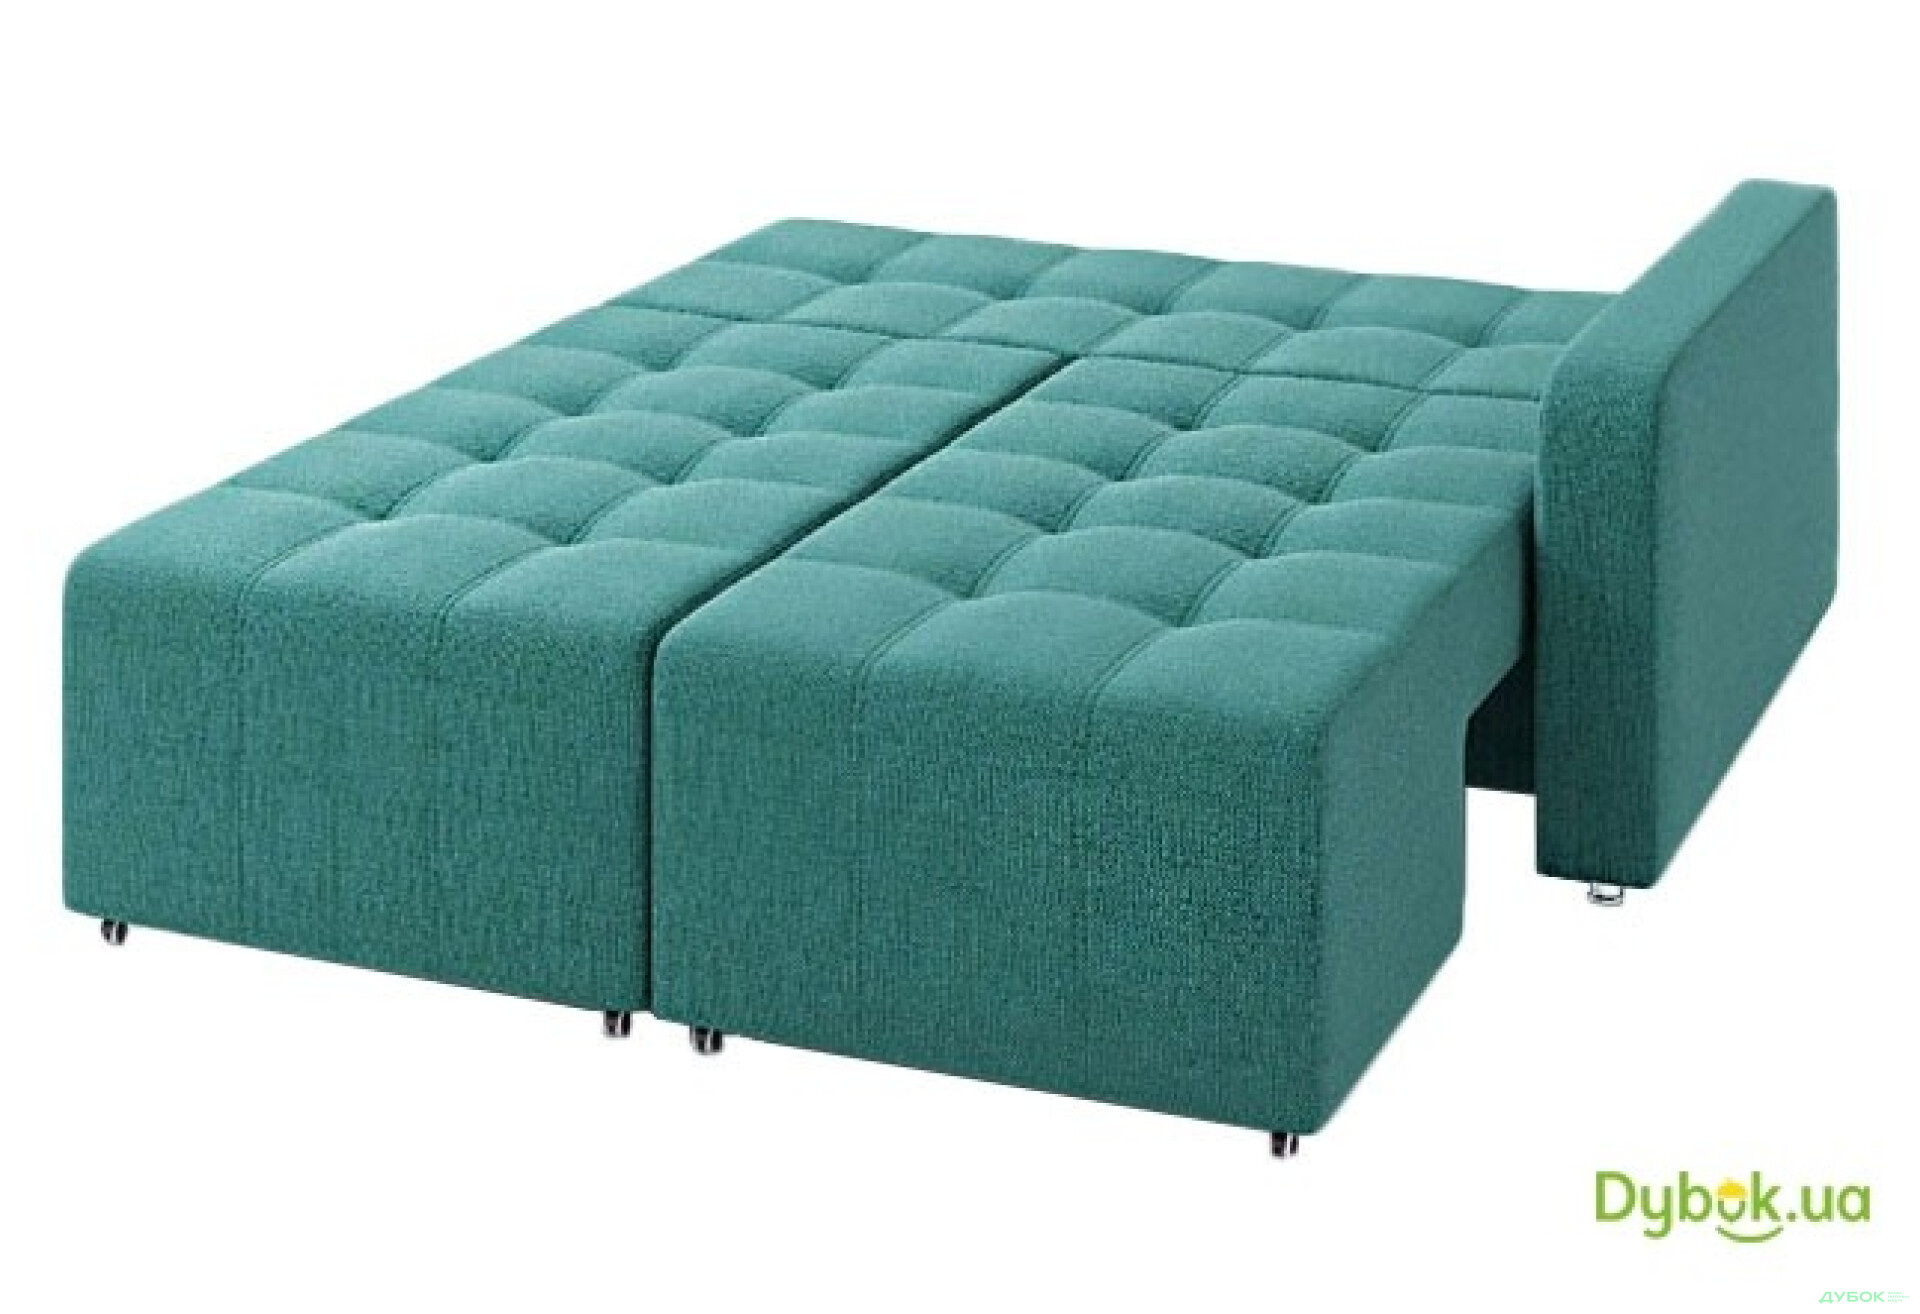 Фото 2 - Мягкий уголок Фиеста ППУ Угловой диван (Дизайн І) Sofyno